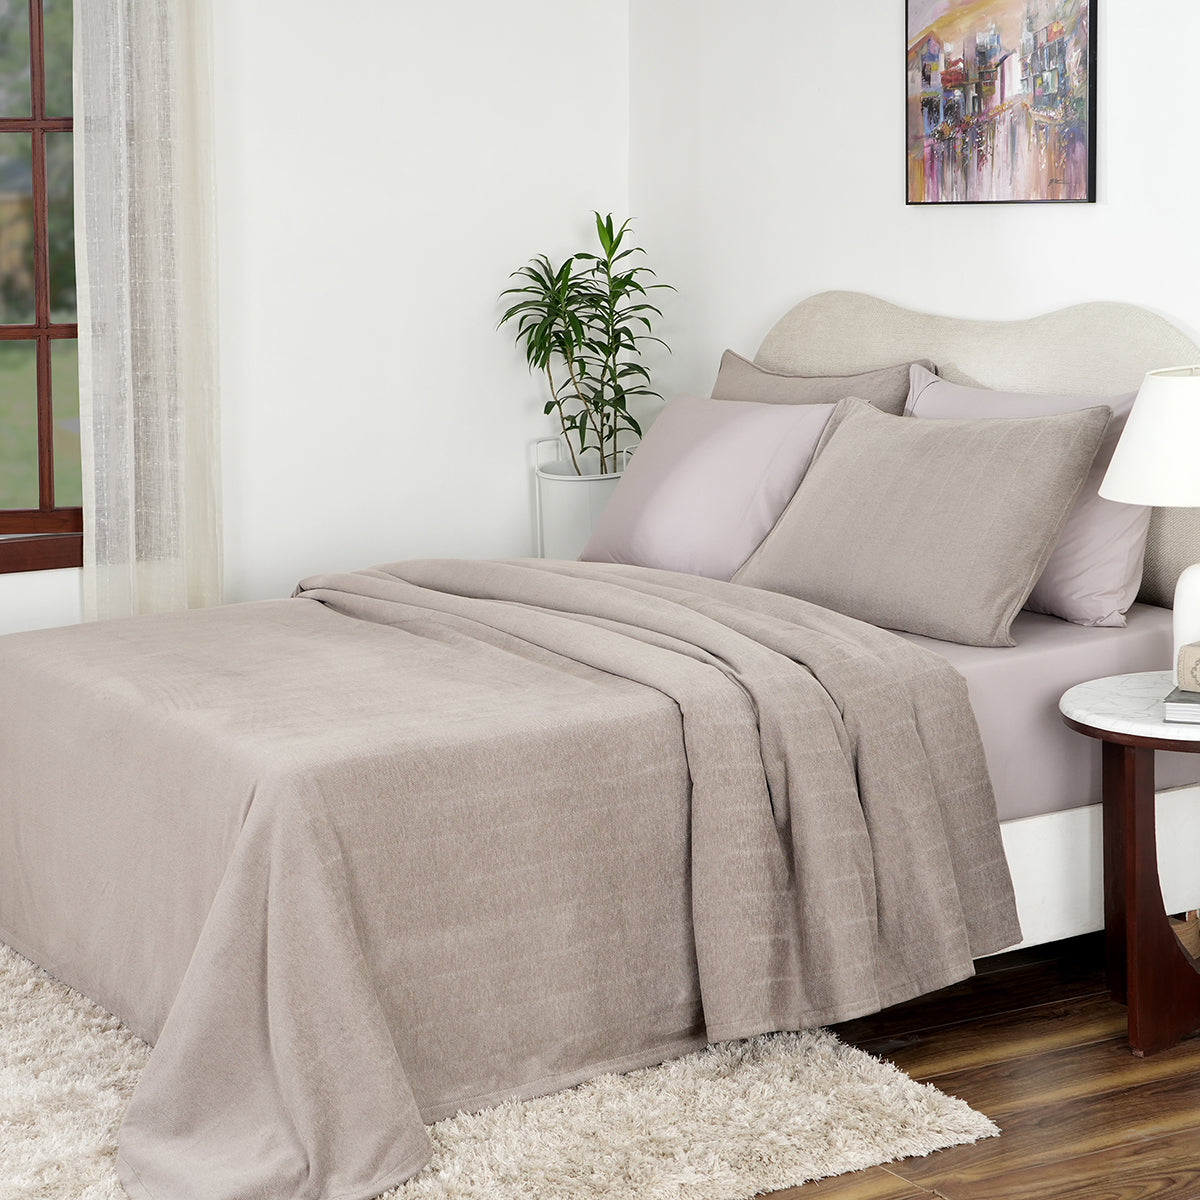 Caroline Woven Herringbone Pattern with Soft Drape Style Neutral Bed Cover/Blanket